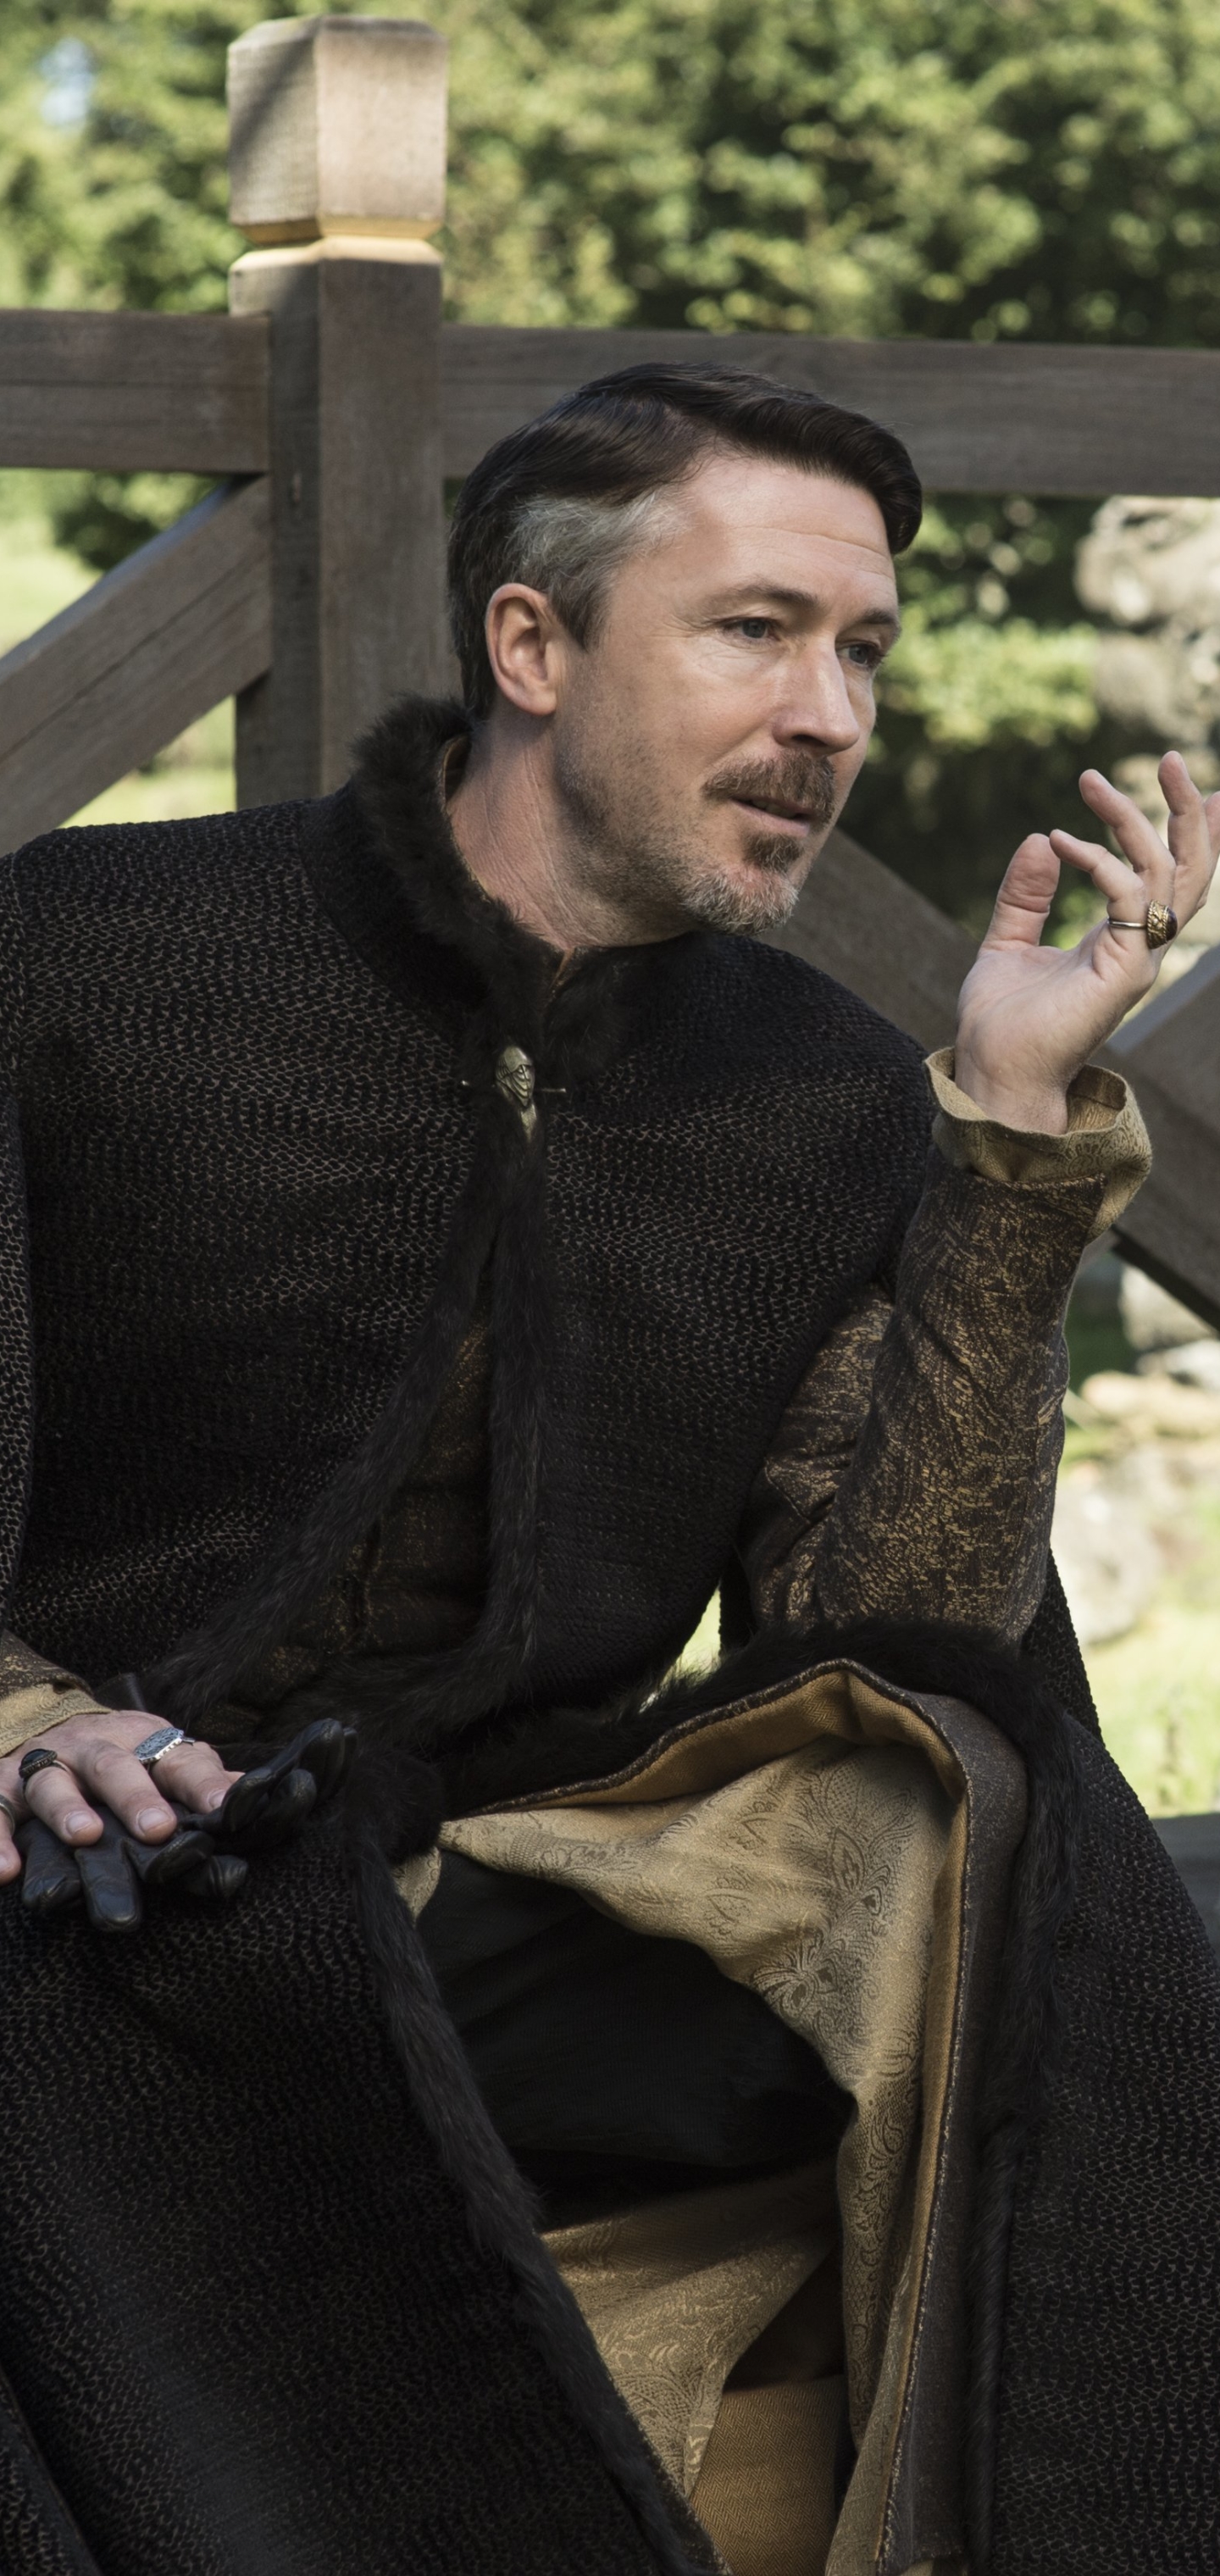 Game of Thrones Photo: Petyr Baelish | Petyr baelish, Baelish, Game of  thrones images